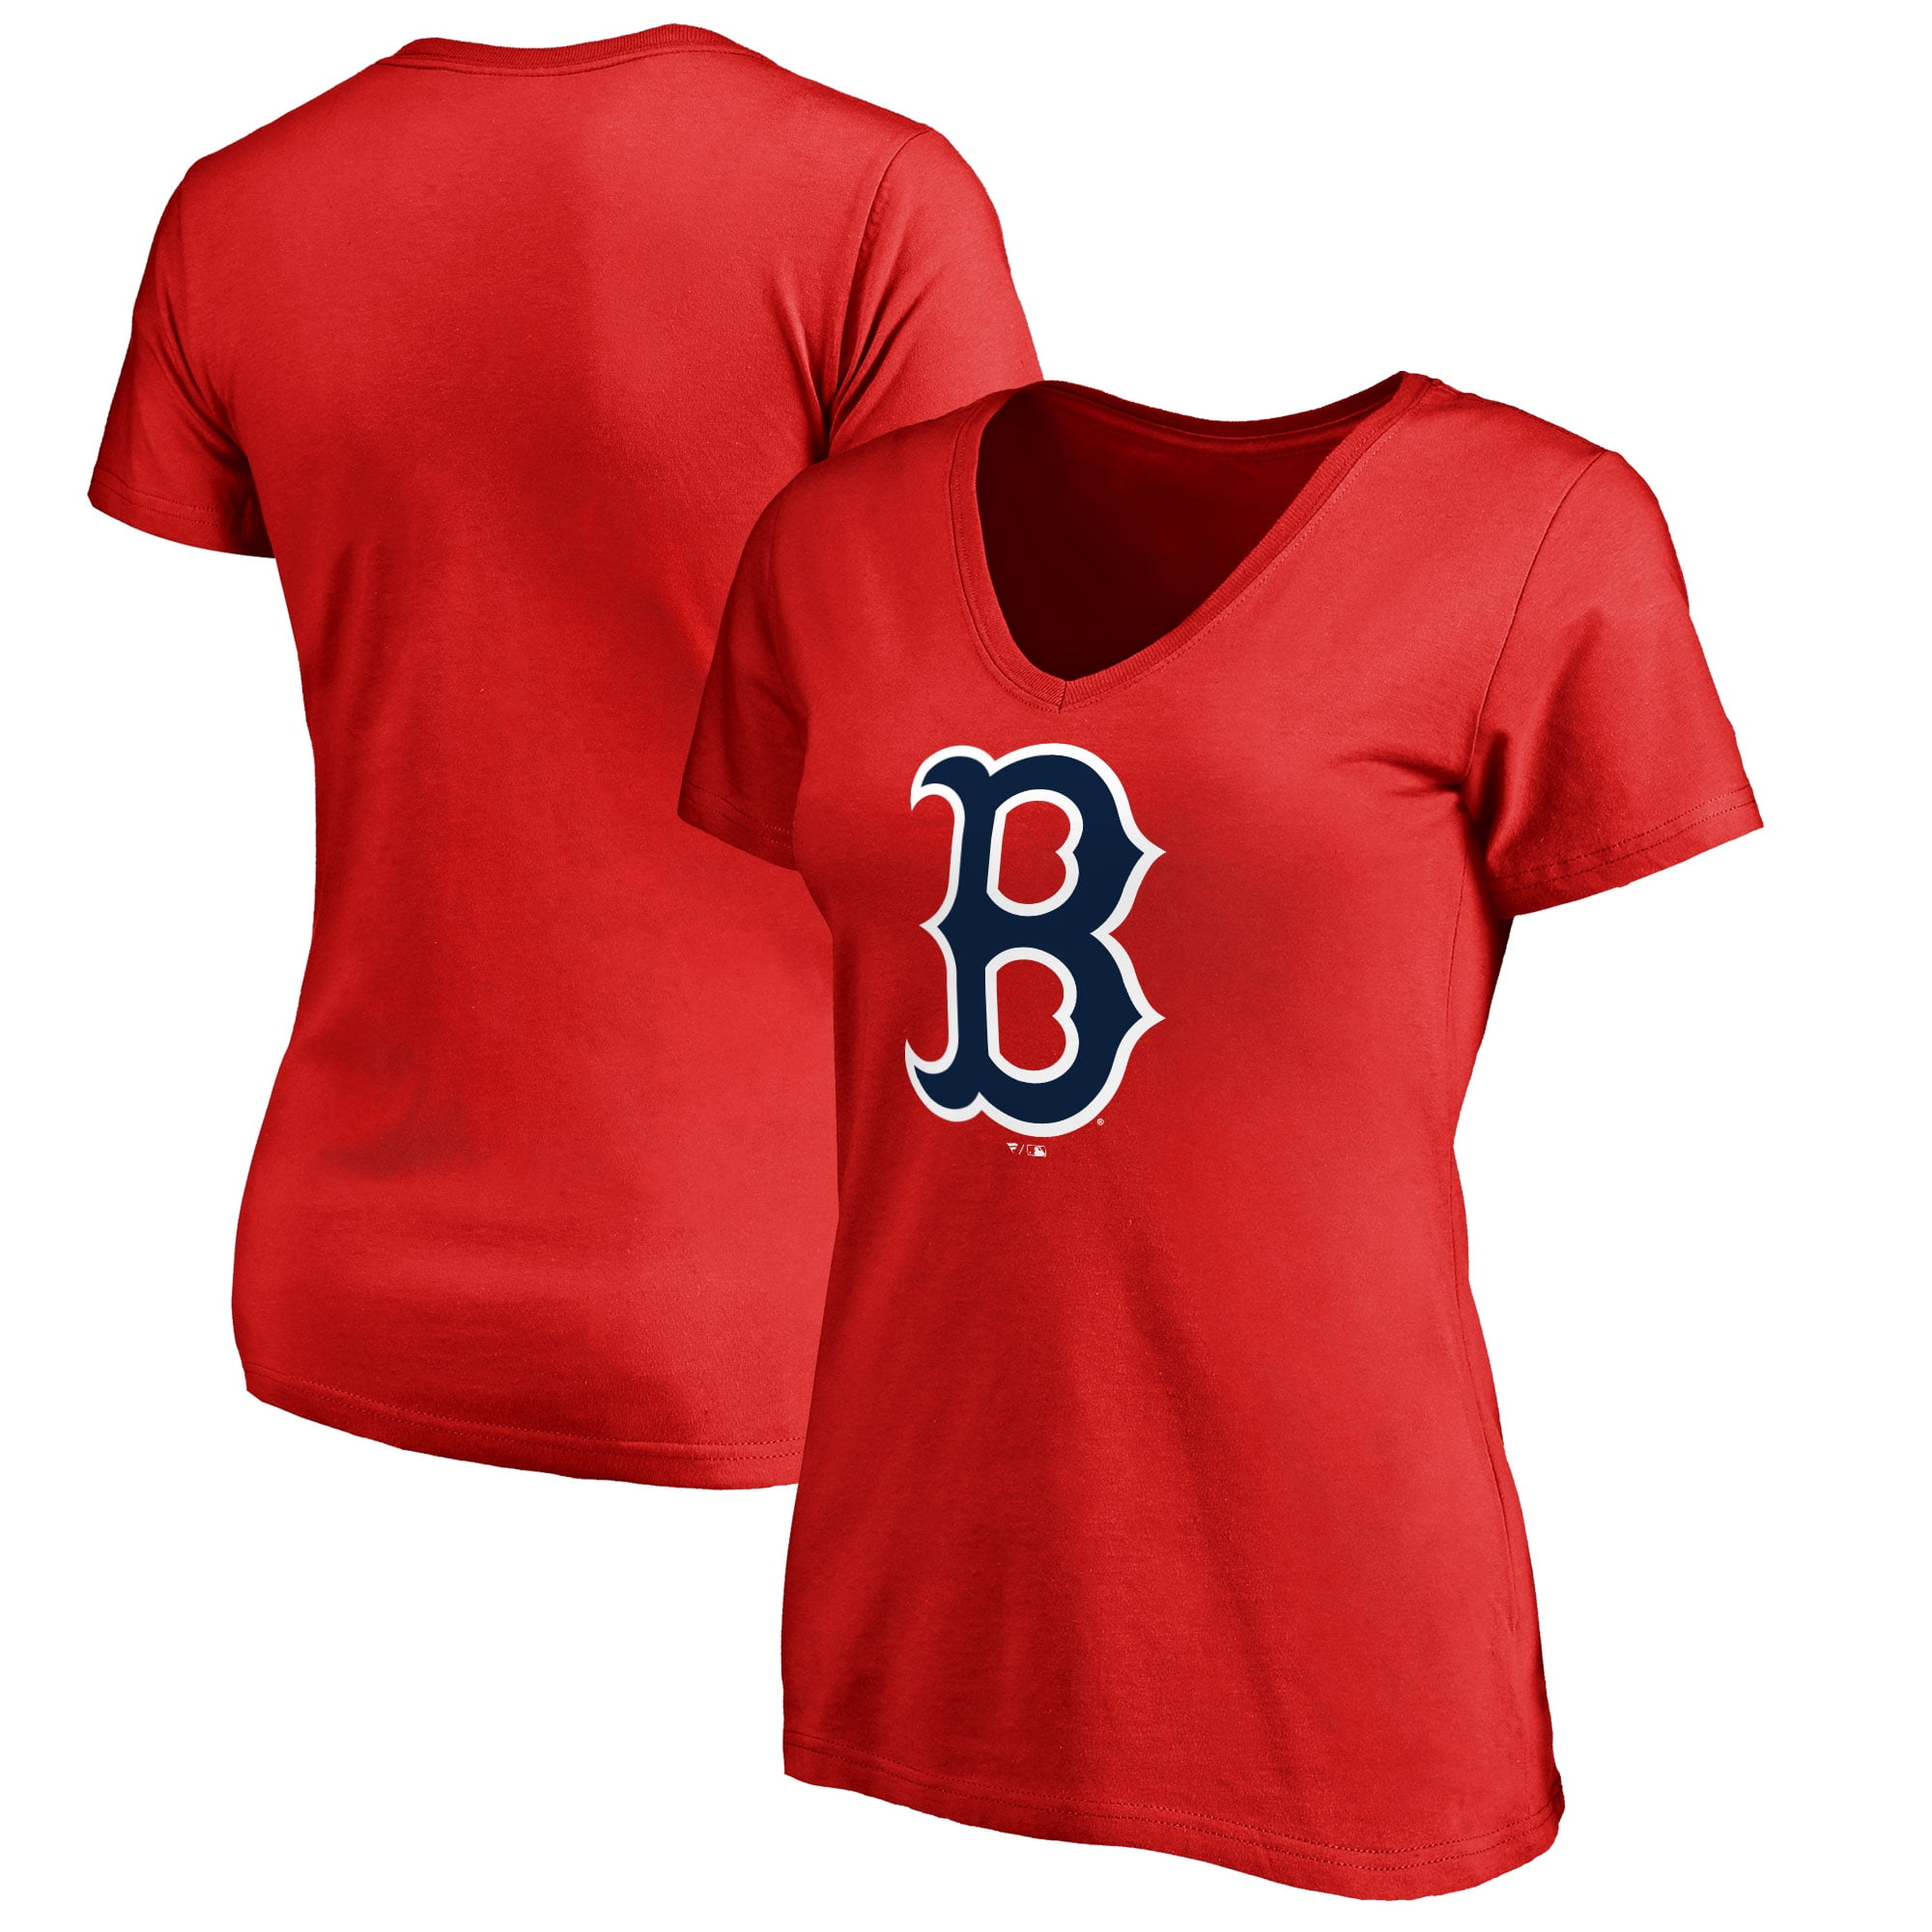 plus size boston red sox shirts